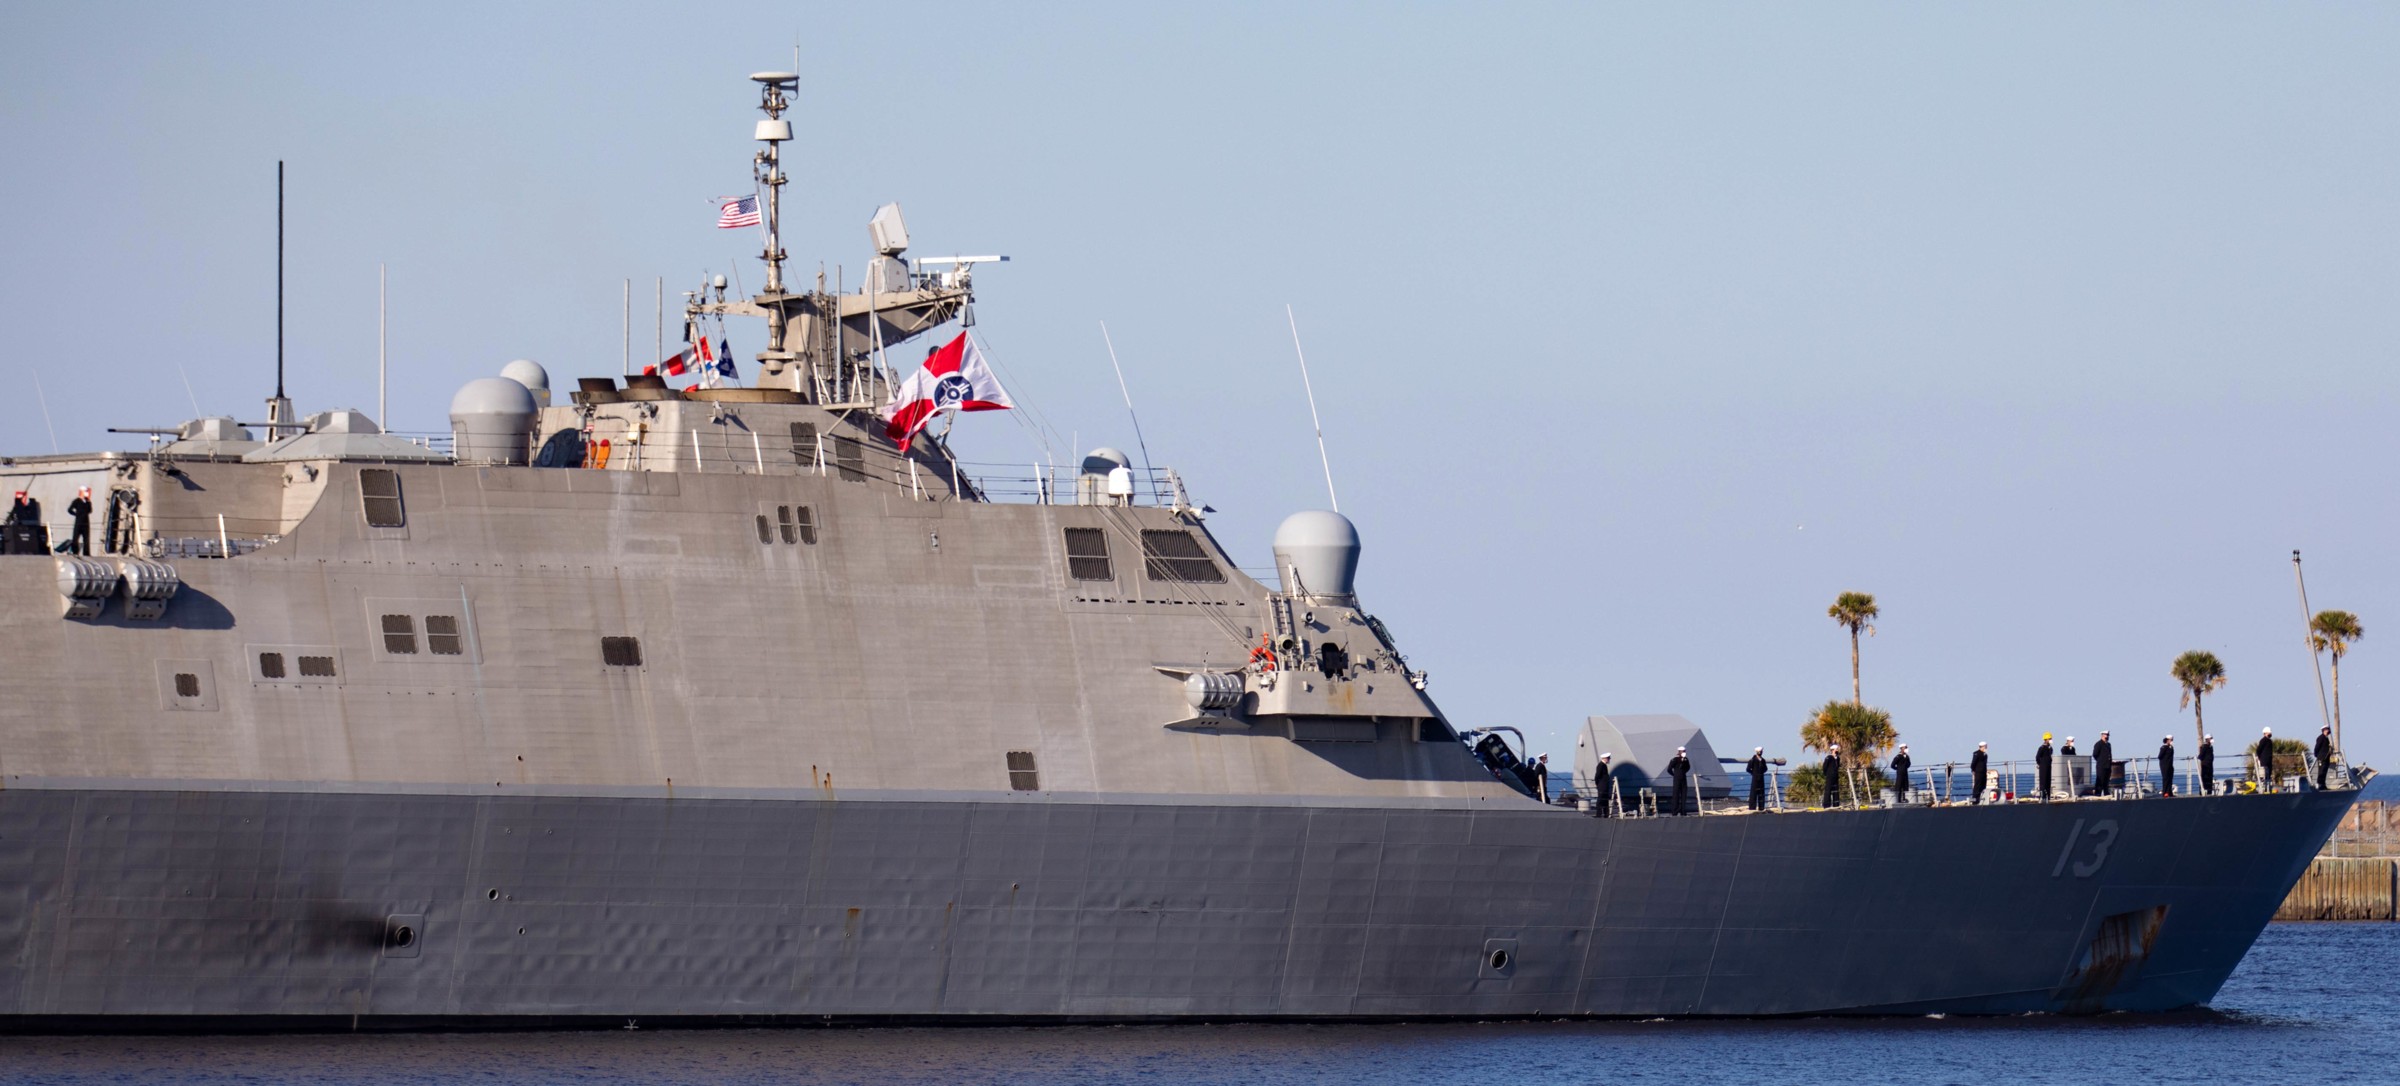 lcs-13 uss wichita freedom class littoral combat ship us navy naval station mayport florida 27